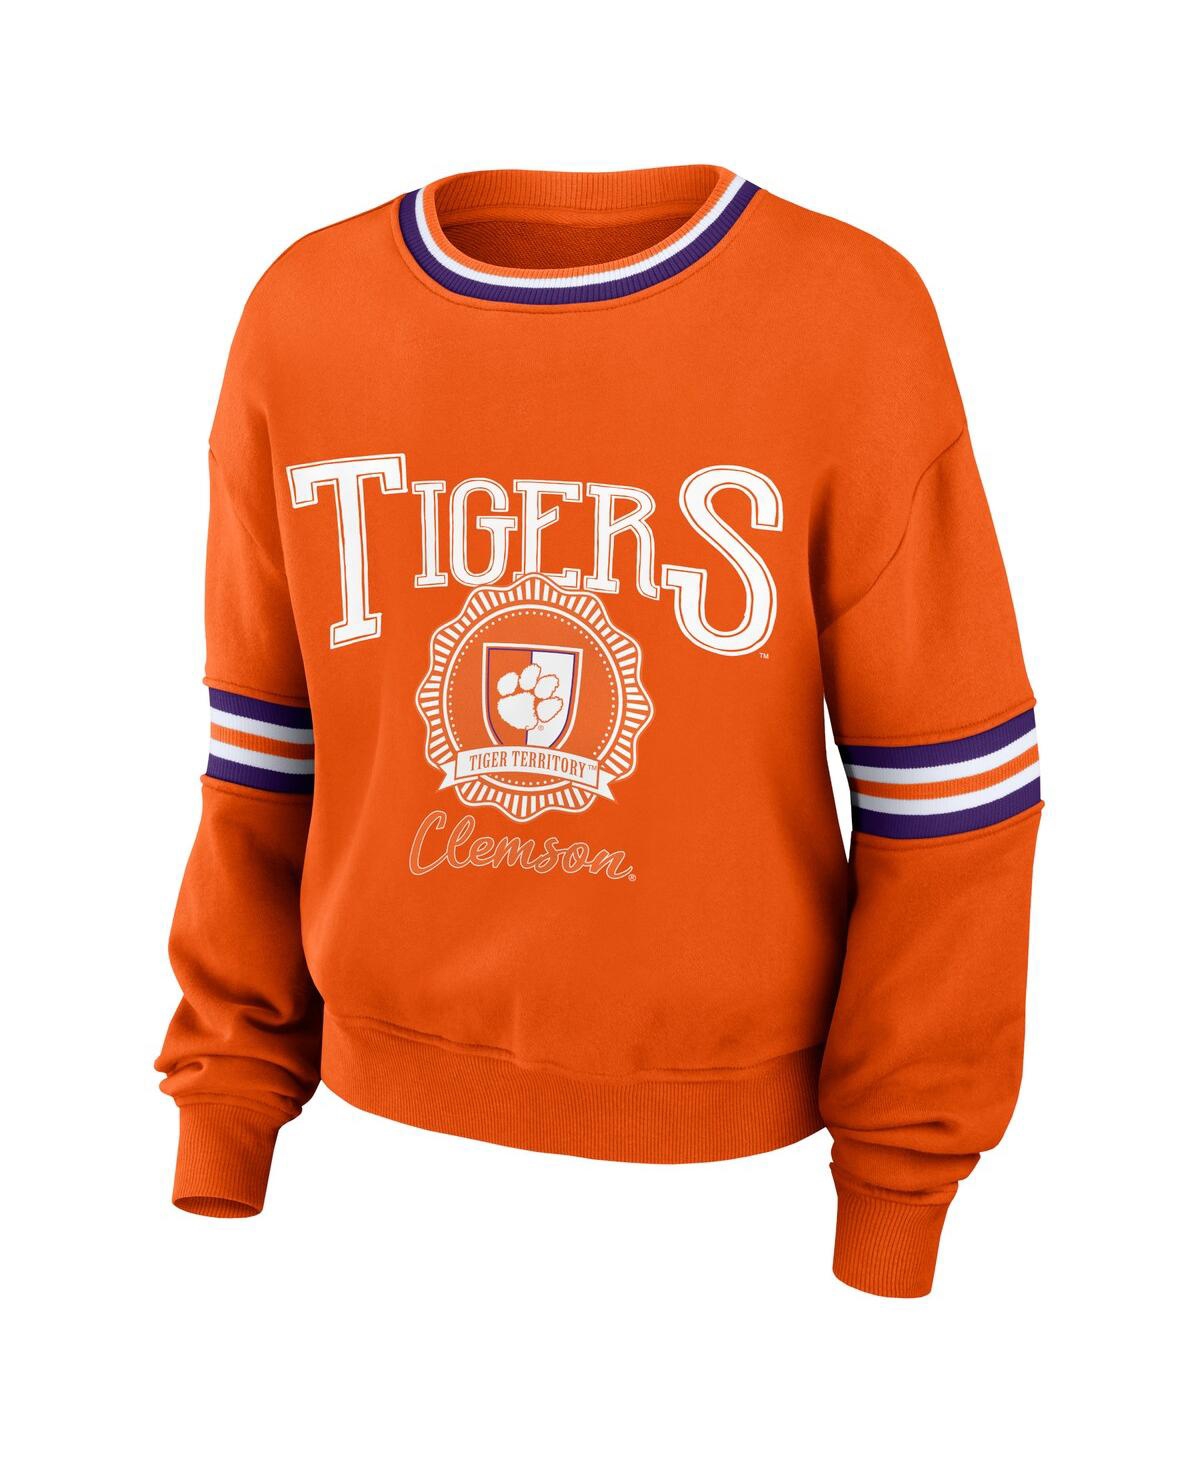 Shop Wear By Erin Andrews Women's  Orange Distressed Clemson Tigers Vintage-like Pullover Sweatshirt